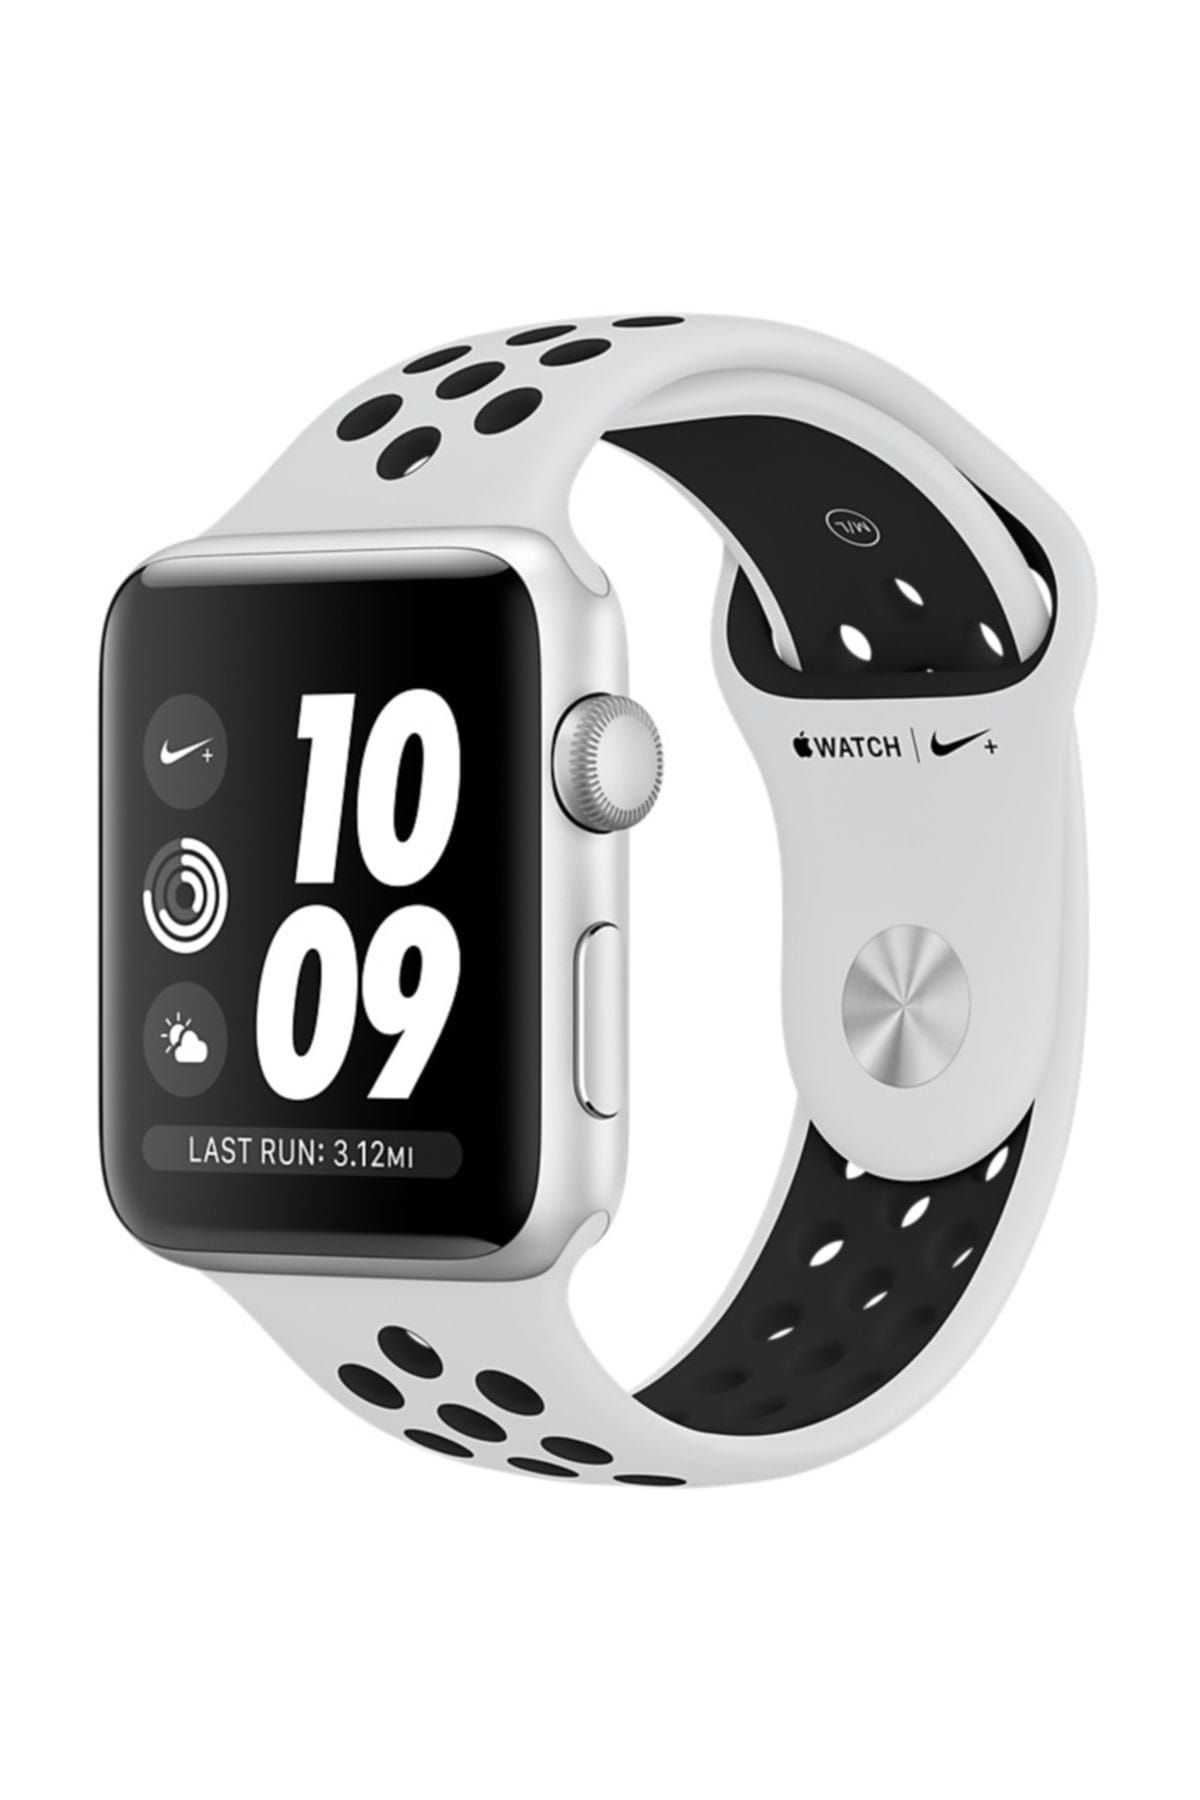 Apple Watch Nike+ (2017) 38mm Gümüş Rengi Alüminyum Kasa Ve Saf Platin/Siyah Nike Spor Kordon - MQKX2TU/A